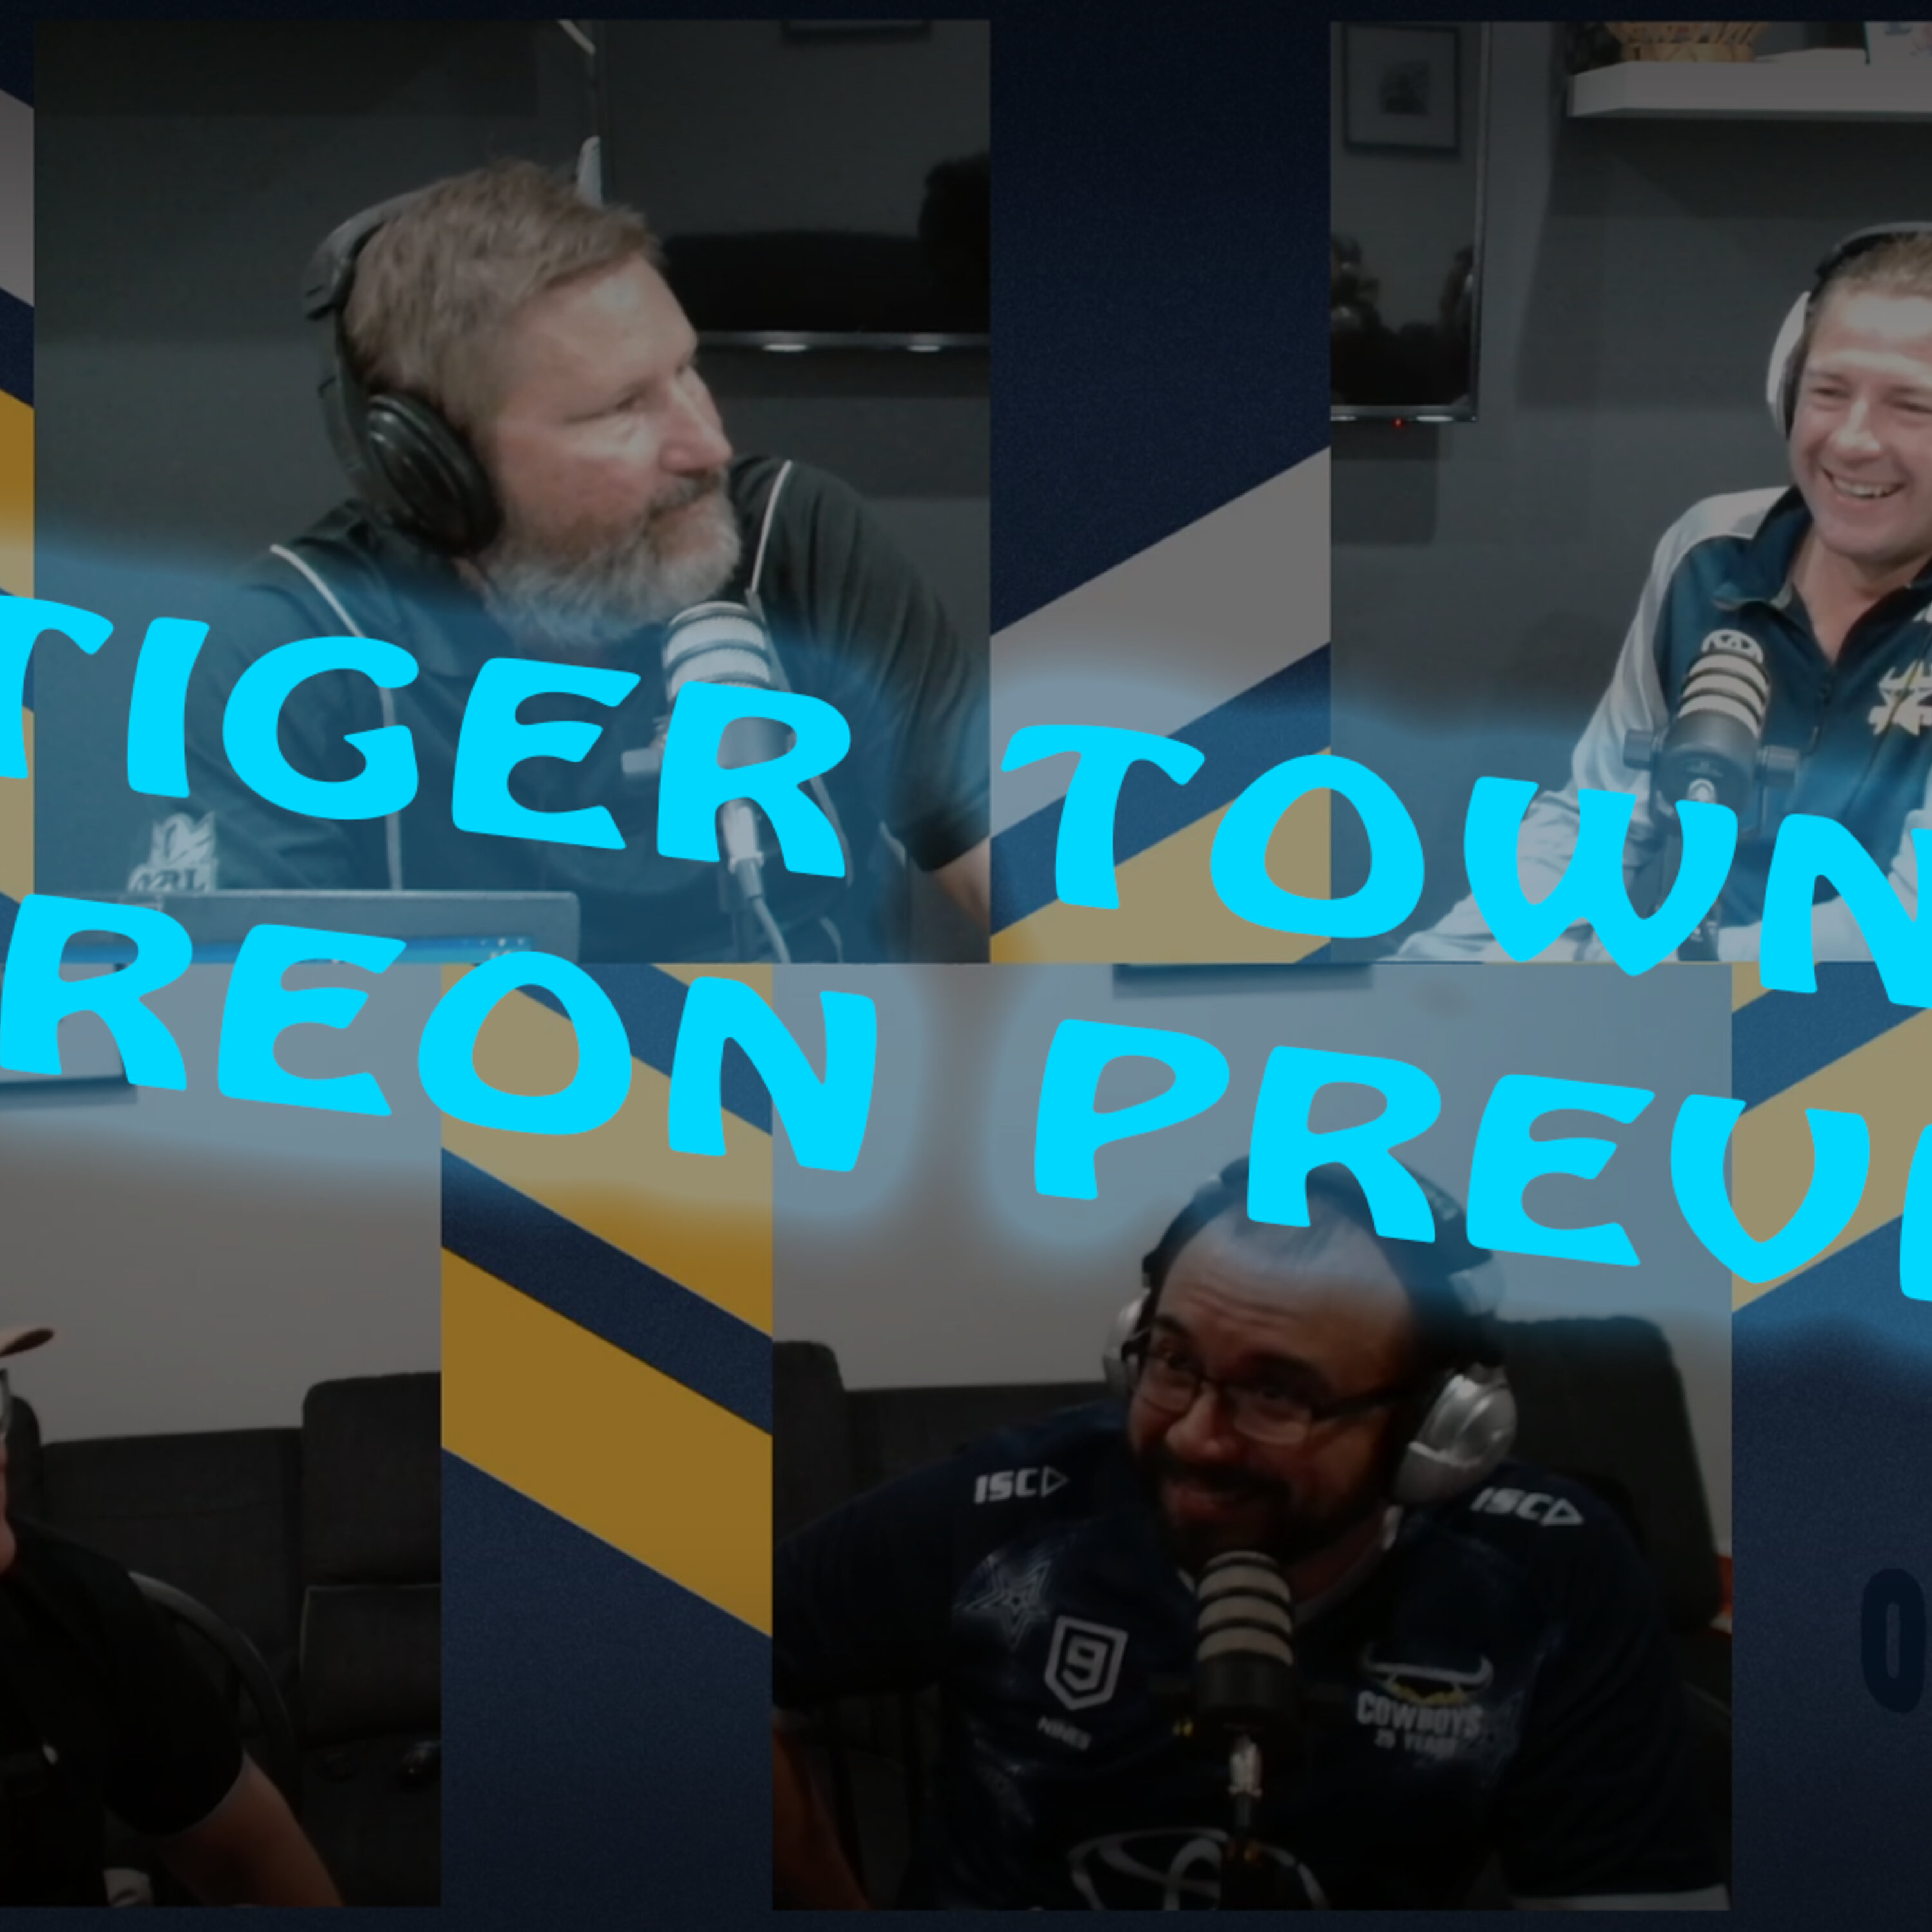 Tiger Town - Patreon Preview